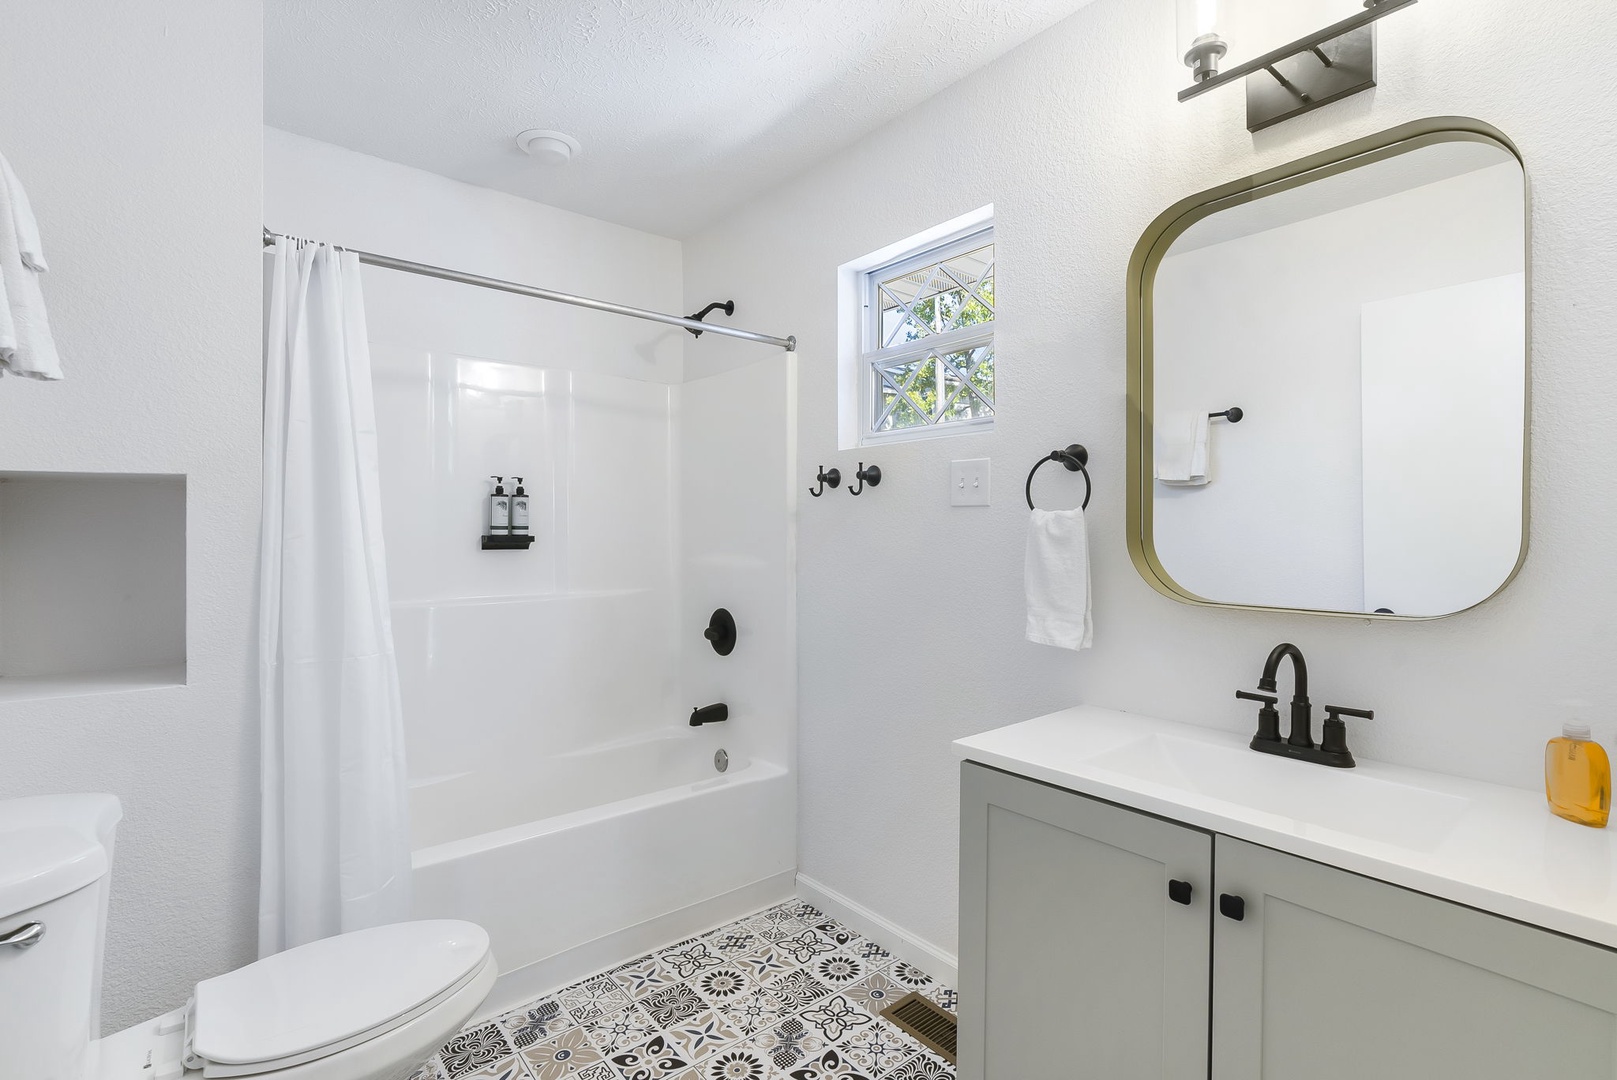 Unit 43: This 2nd floor en suite includes a single vanity & shower/tub combo